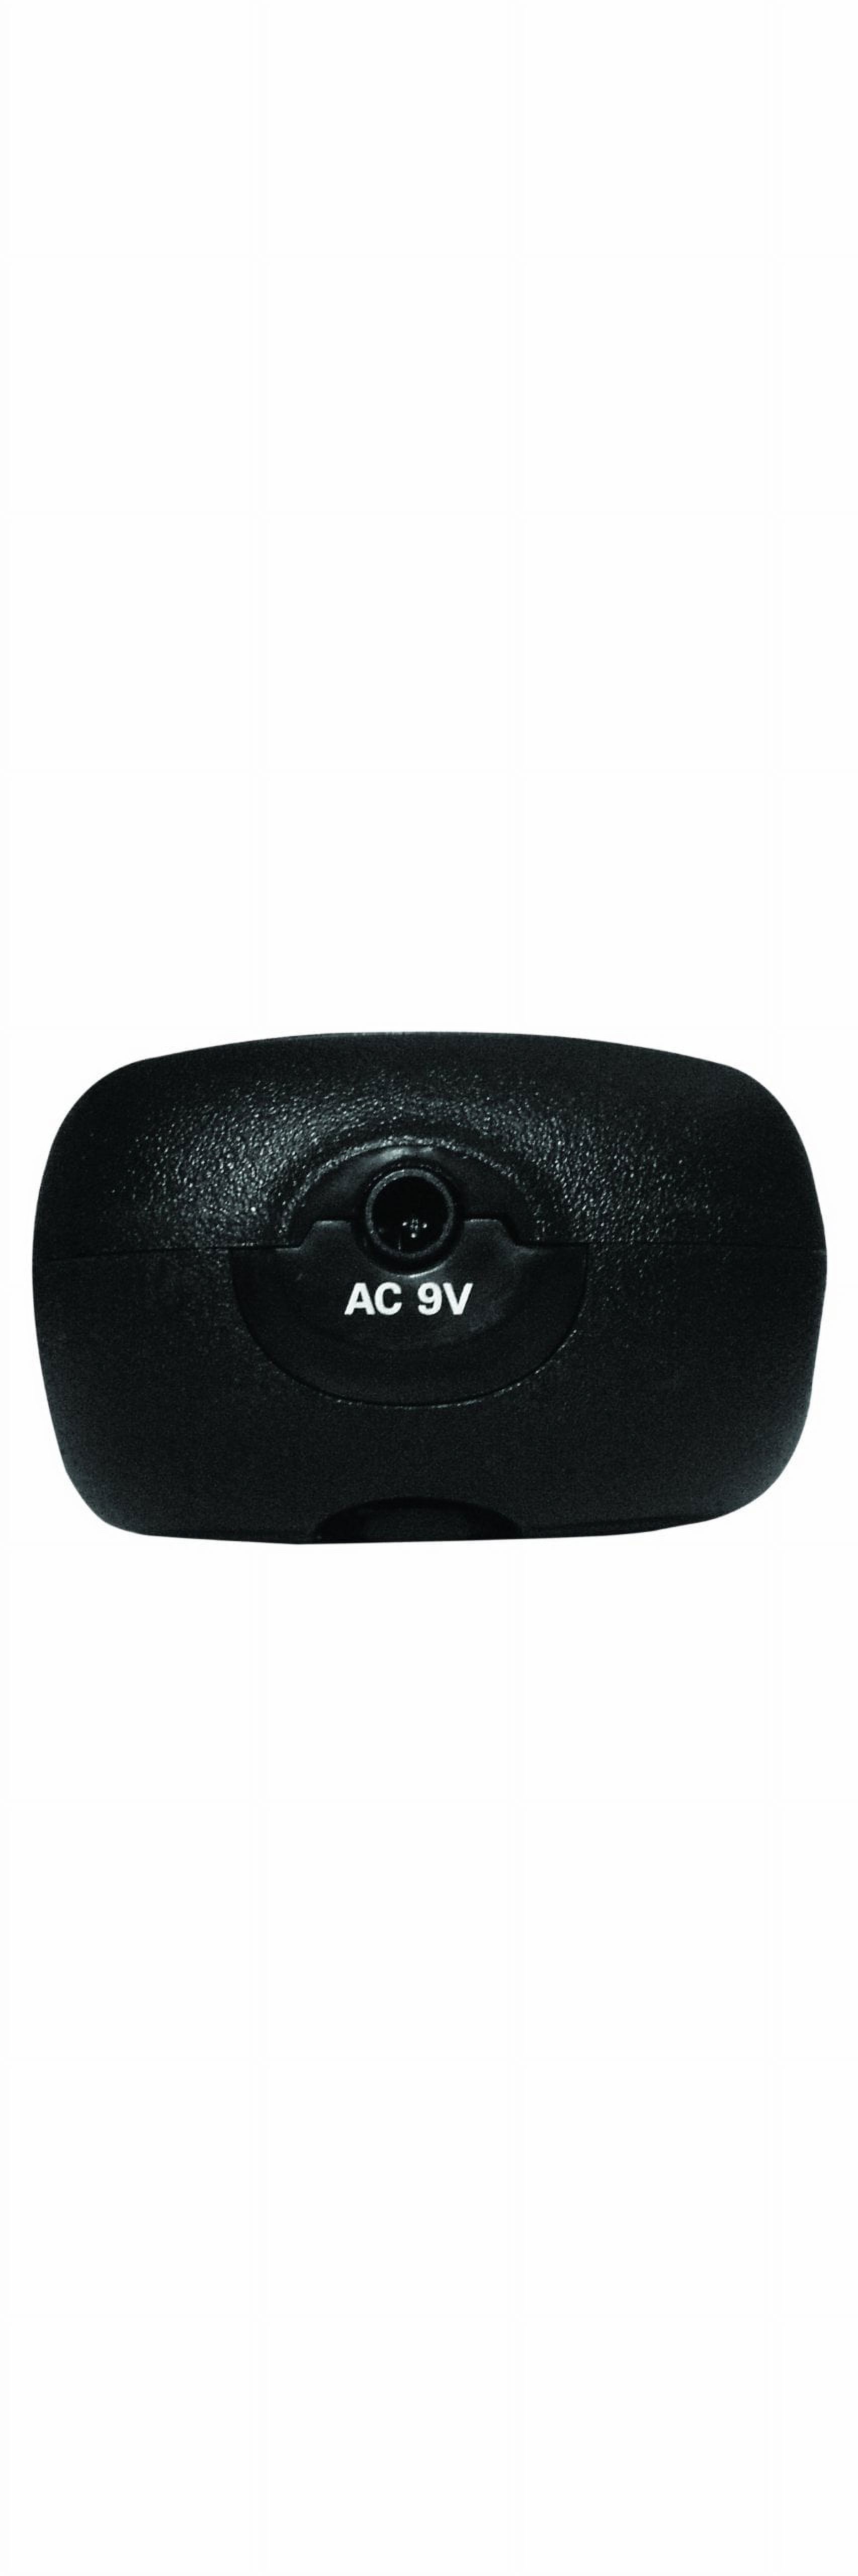 Motorola CCHUSB Mini USB Car Charger (Black) - image 5 of 8